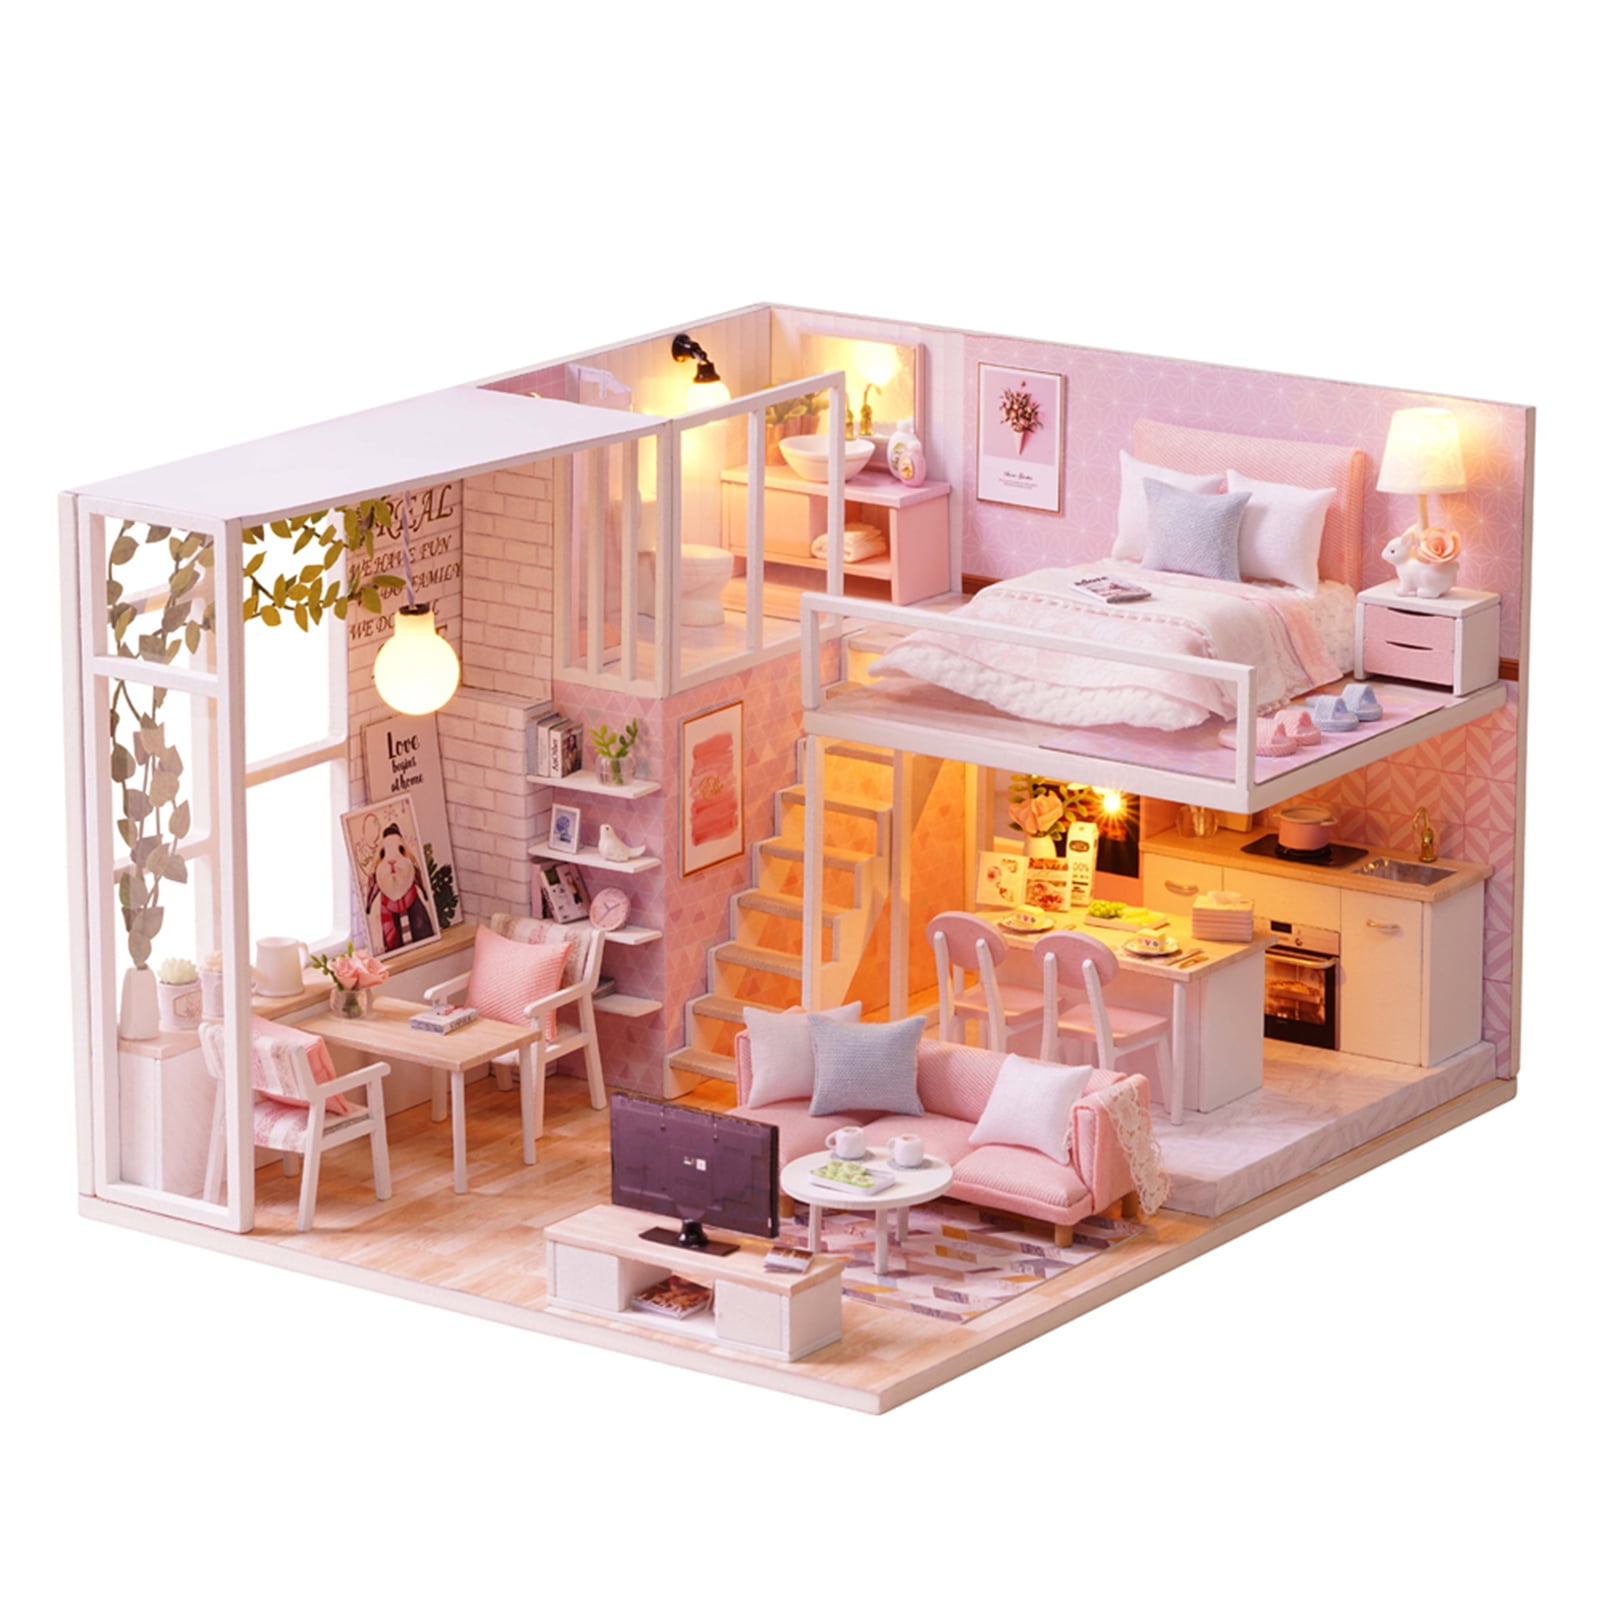 VGEBY DIY House Model Toy Wooden Loft Doll House Model Kits DIY Handmade Miniature Dollhouse Toy Gift